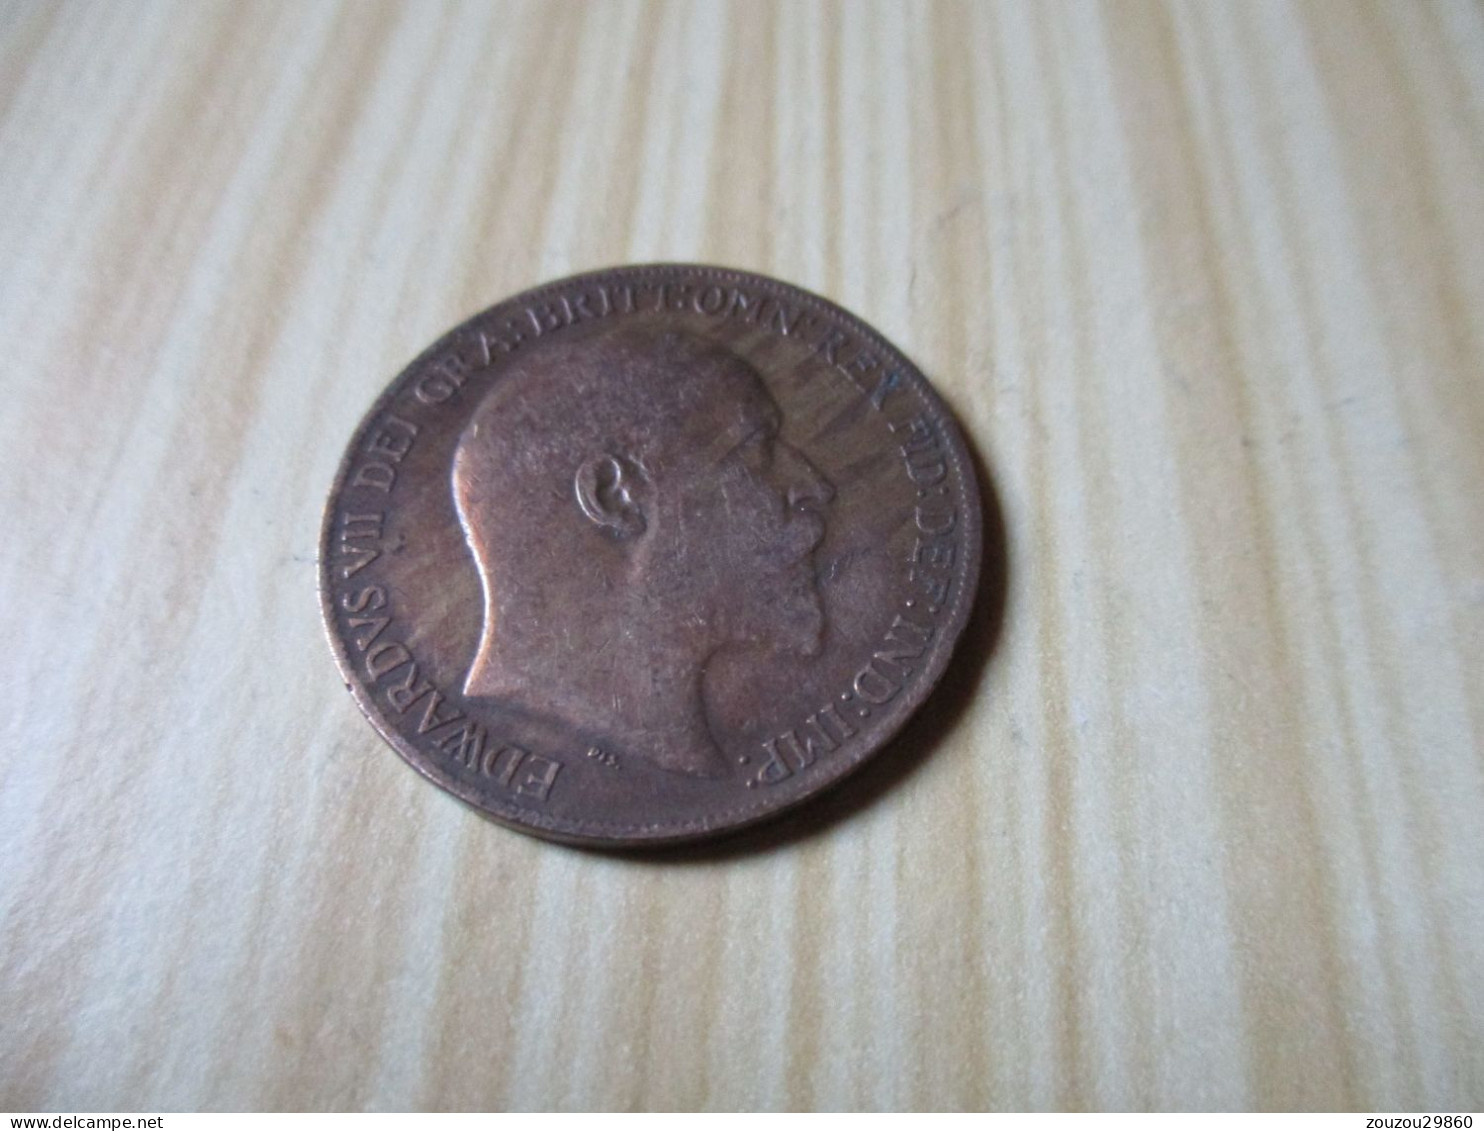 Grande-Bretagne - One Penny Edouard VII 1908.N°296. - D. 1 Penny